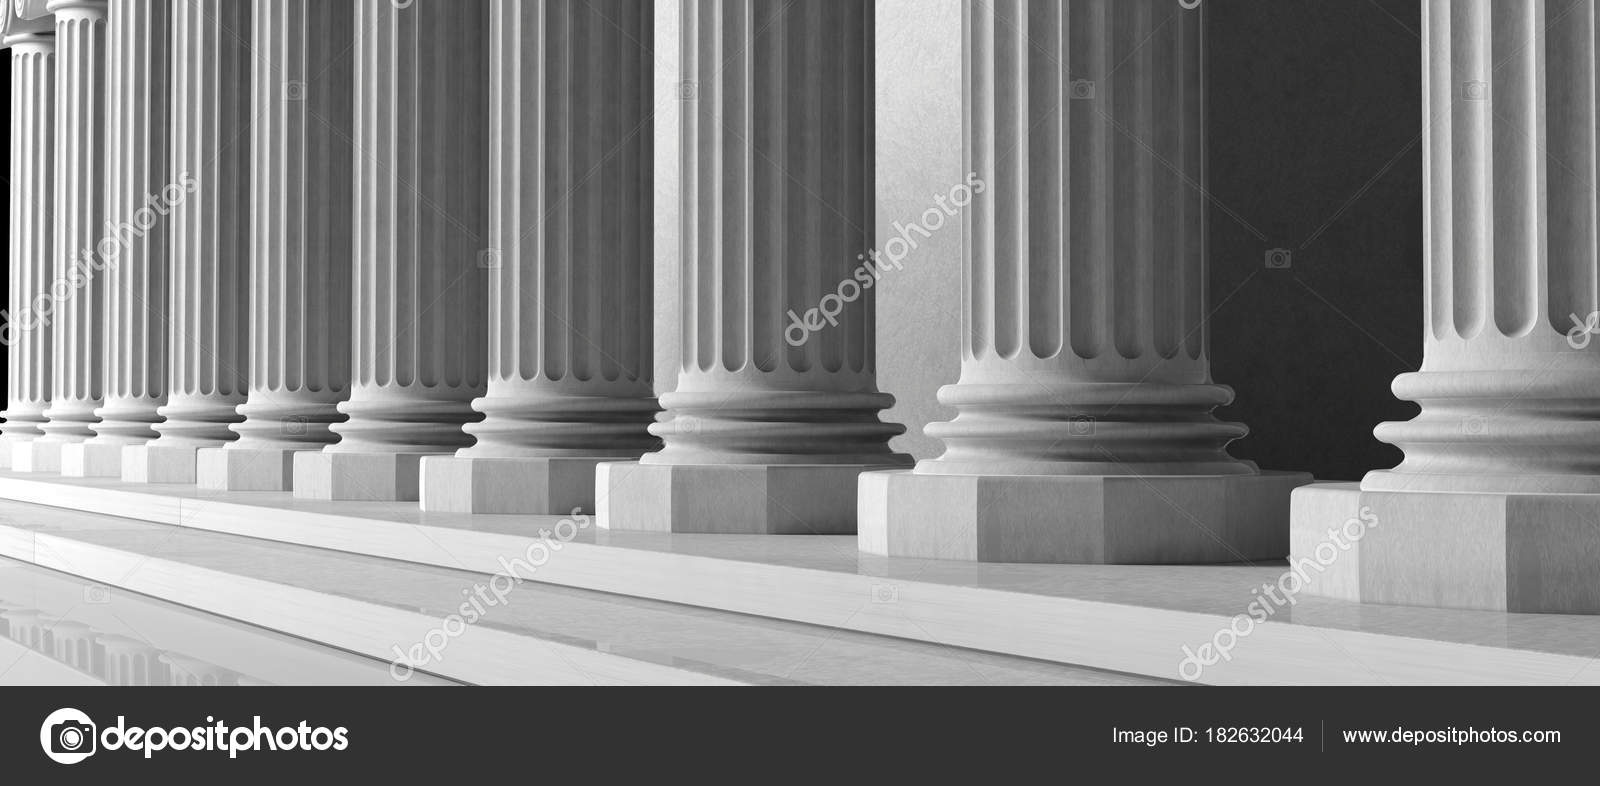 Page columns. Мраморные столбы. Античные колонны. Мраморные колонны. Столбы из мрамора.